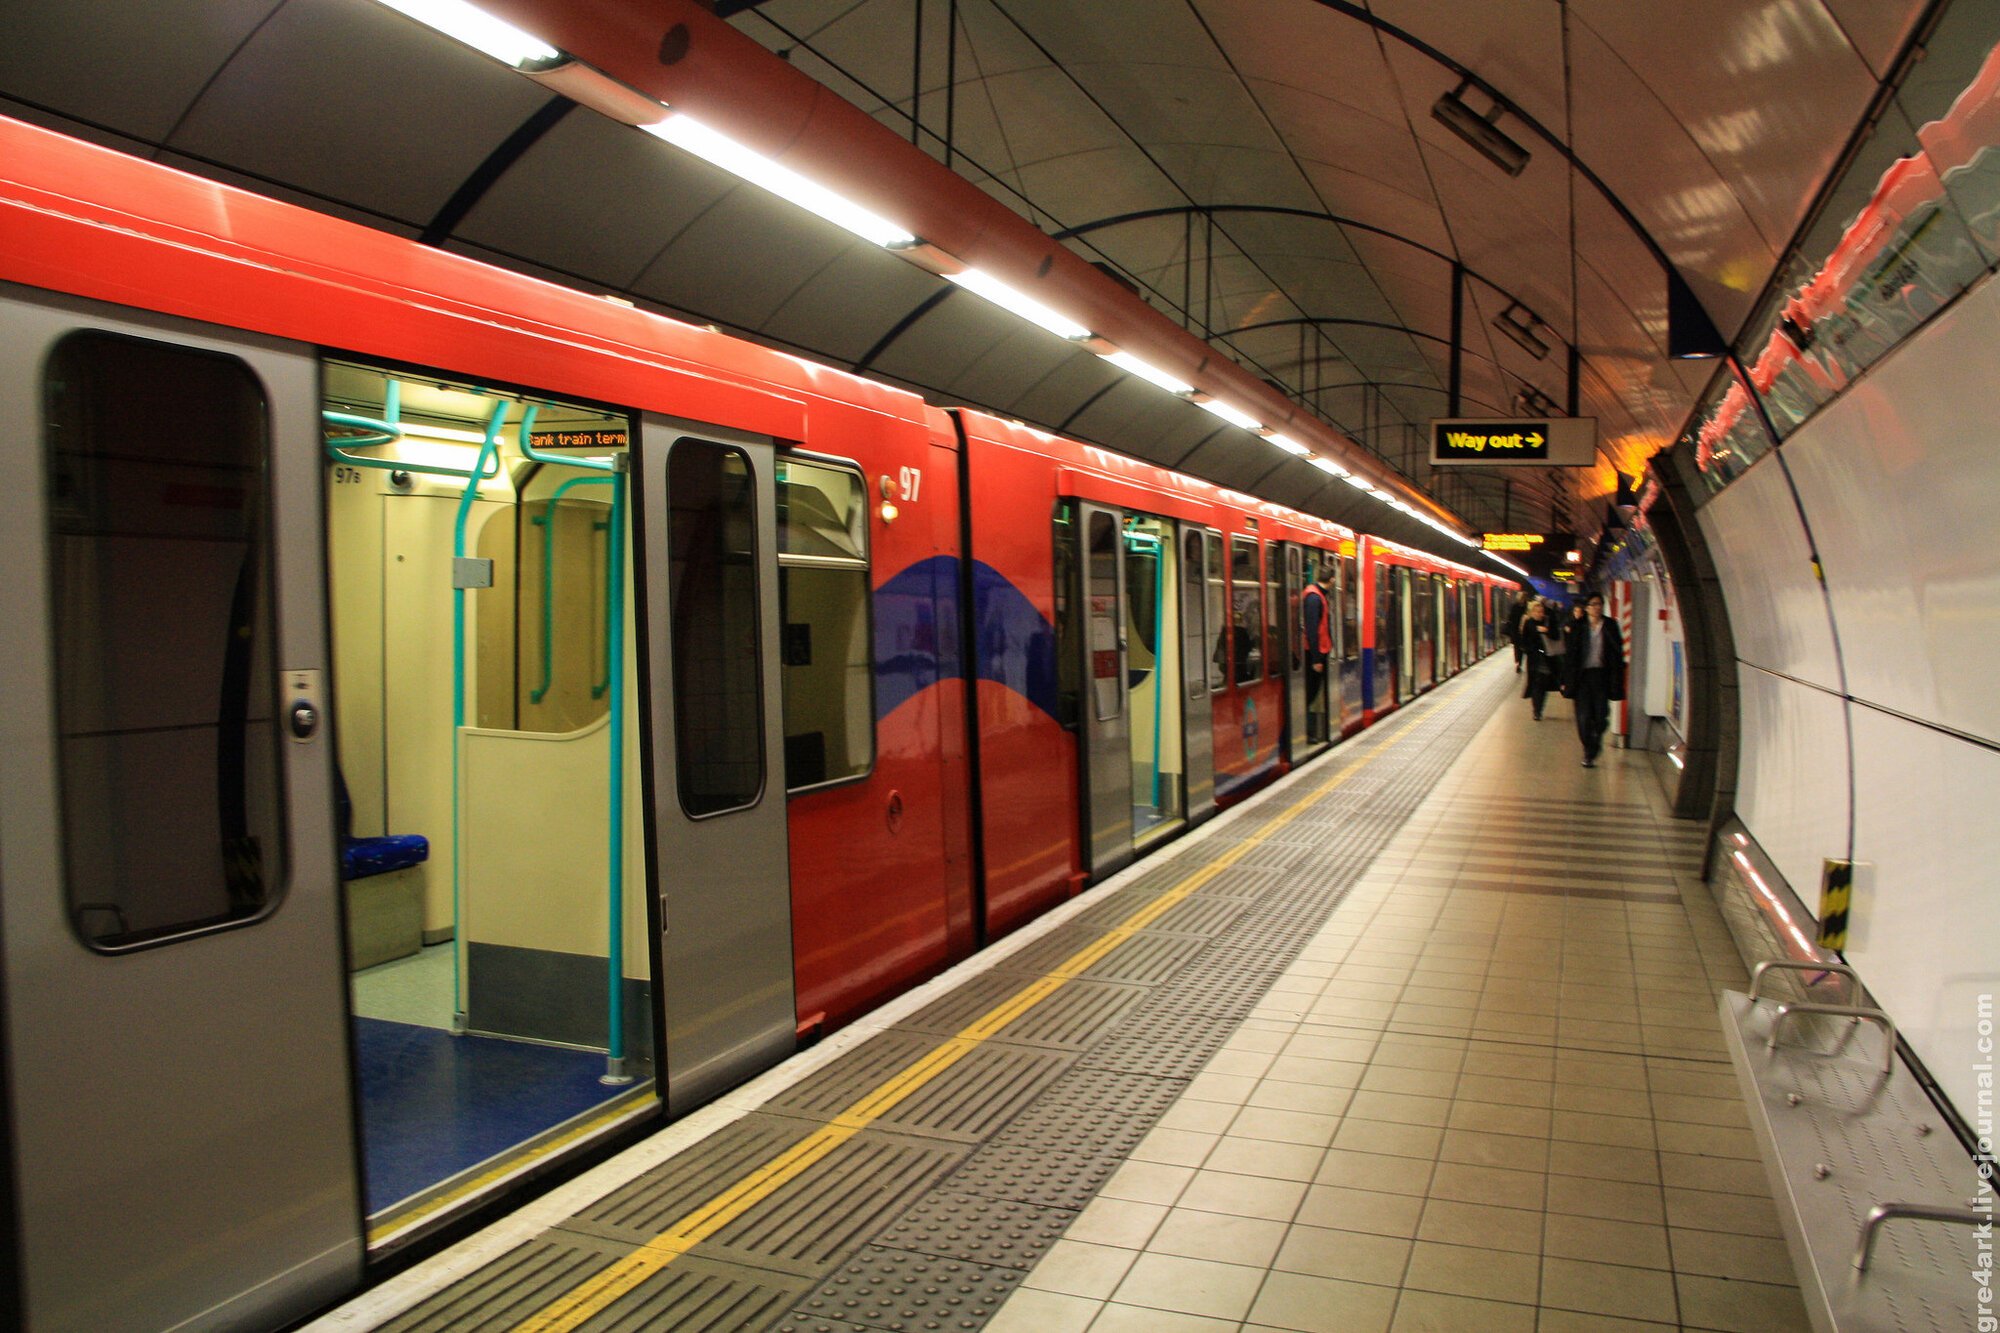 London subway